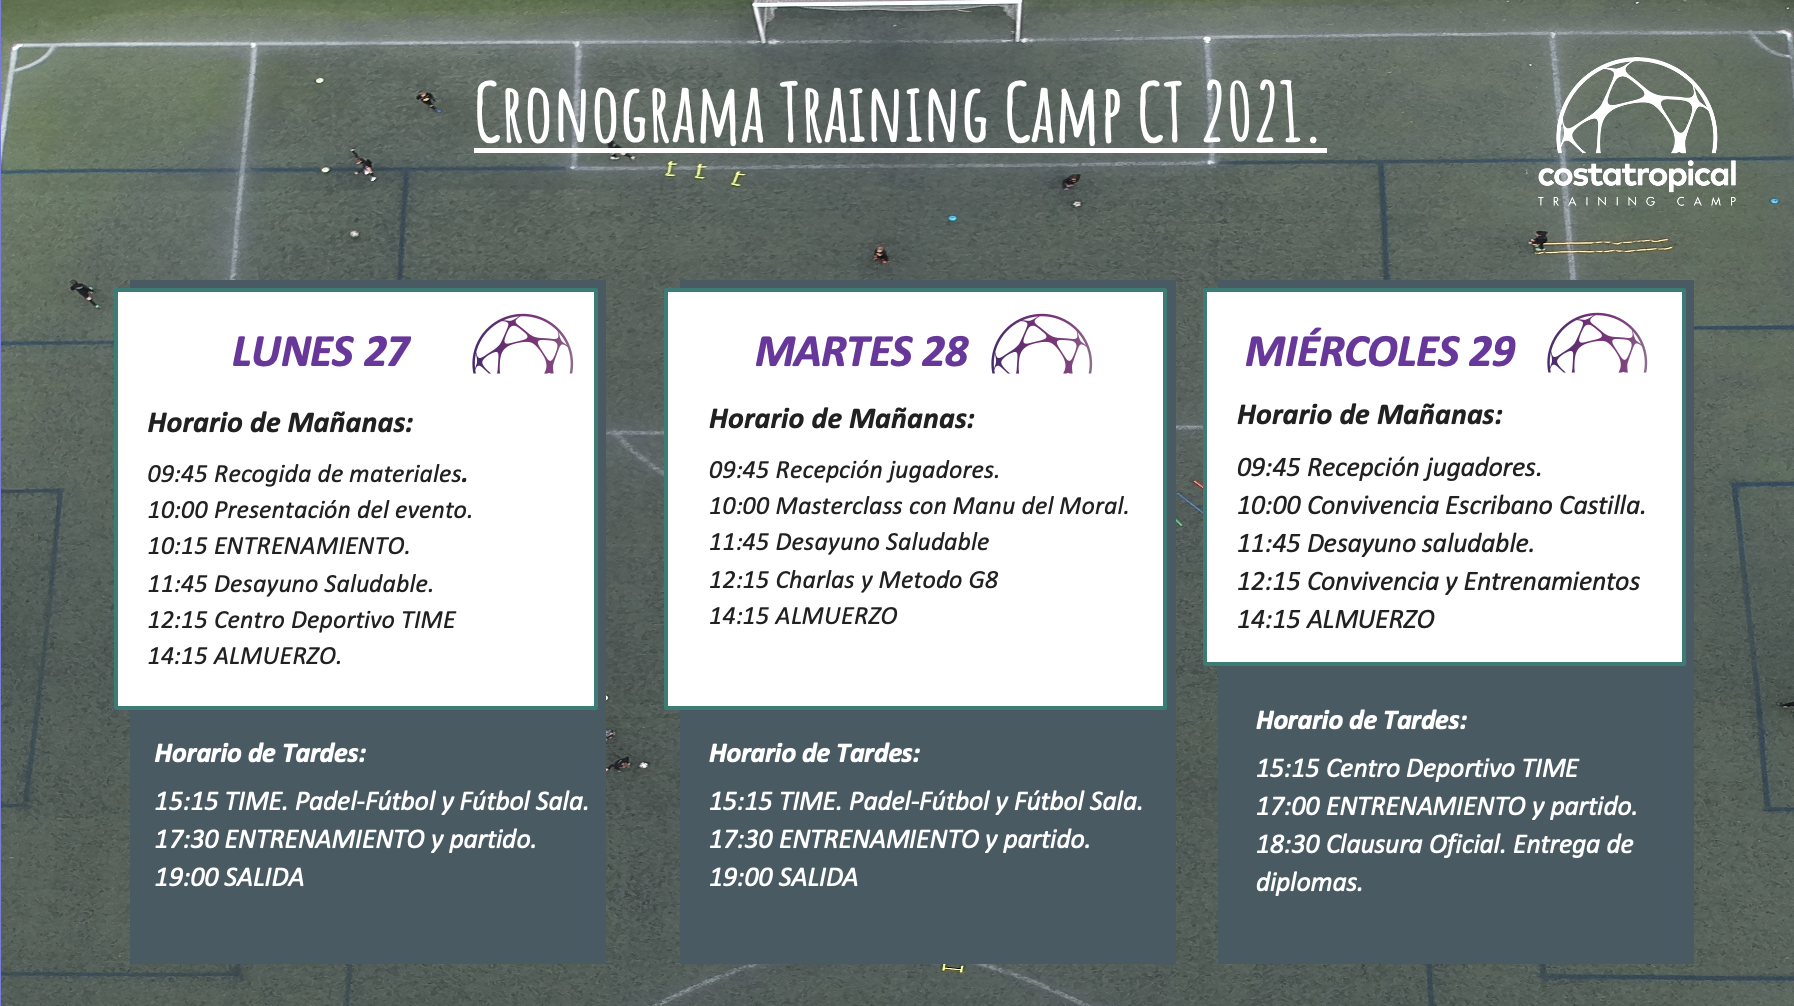 Cronograma Training Camp 2021